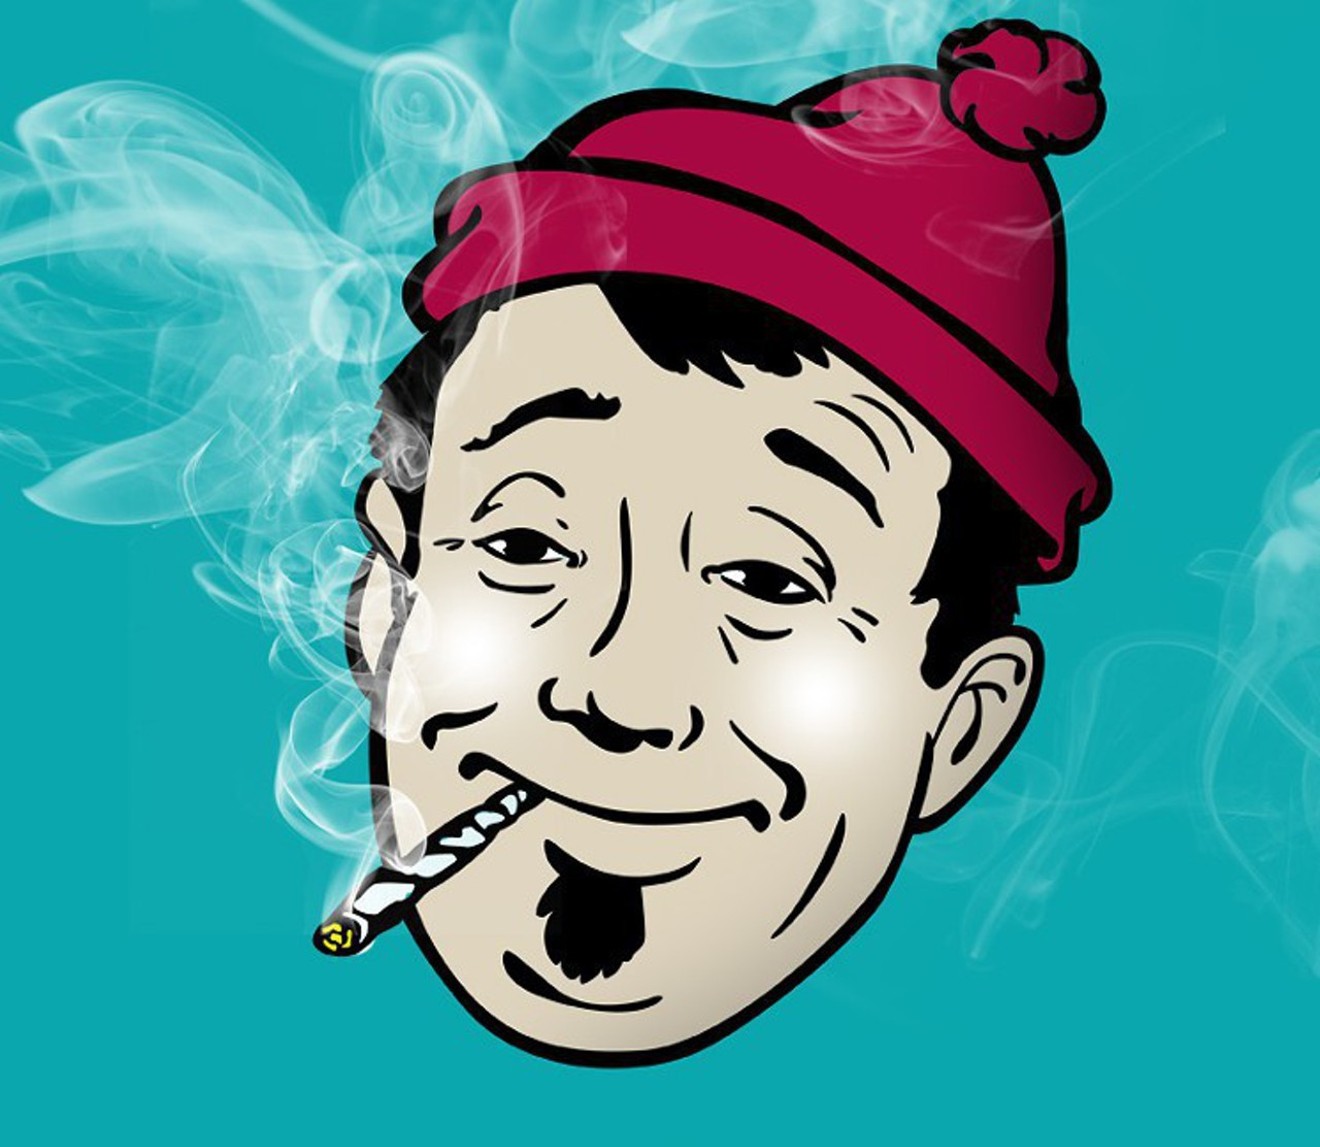 Cartoon character smokes a joint